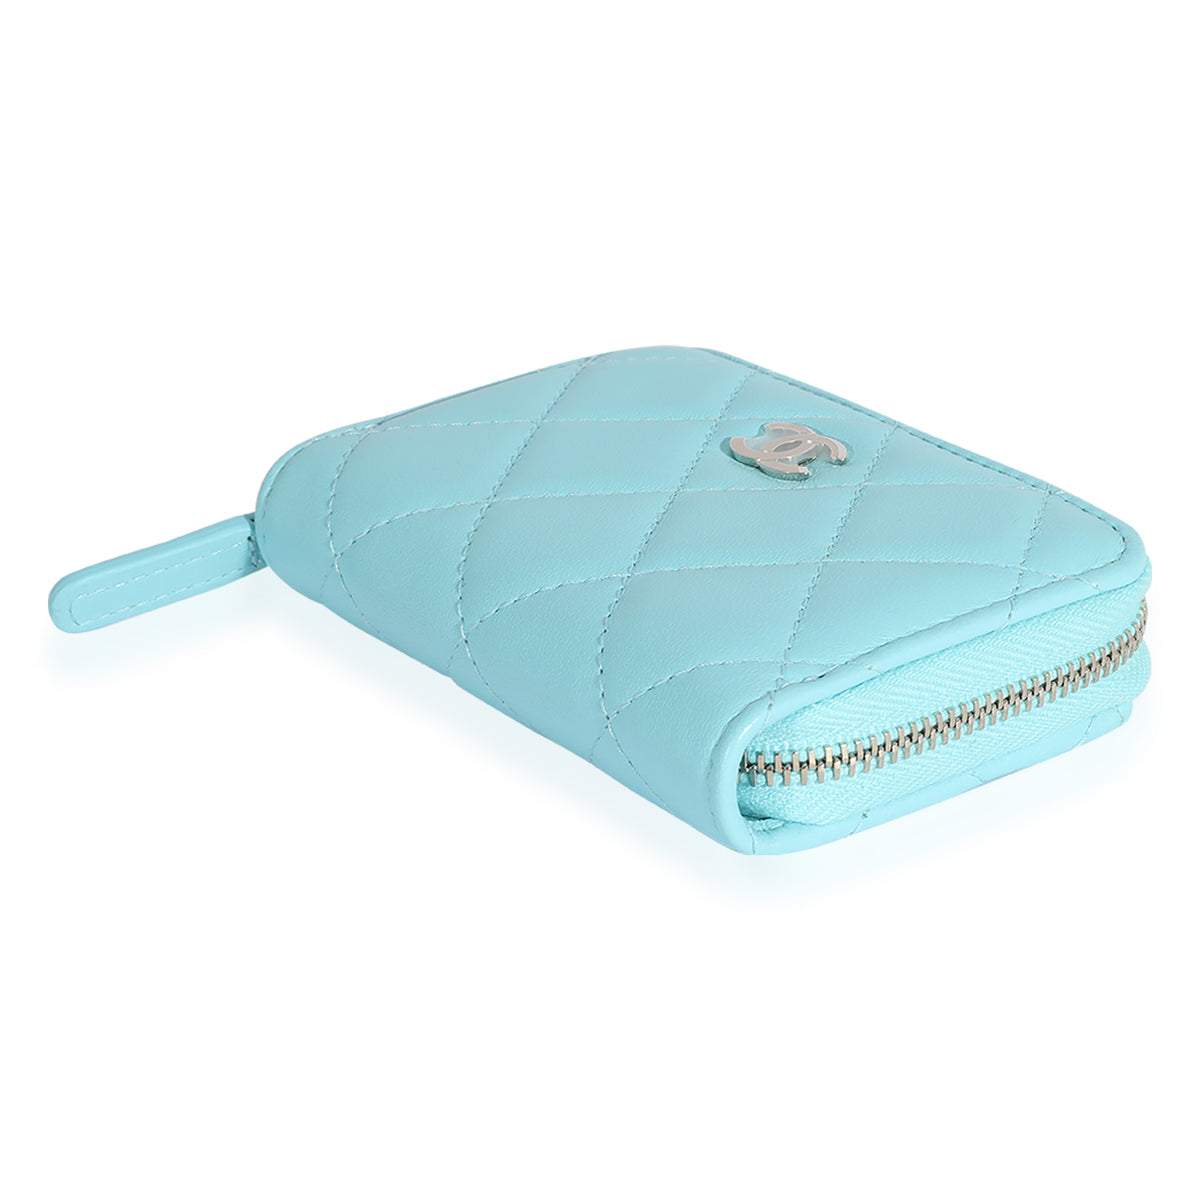 Chanel Medium Classic Double Flap Bag Blue Iridescent Lambskin Silver  Hardware